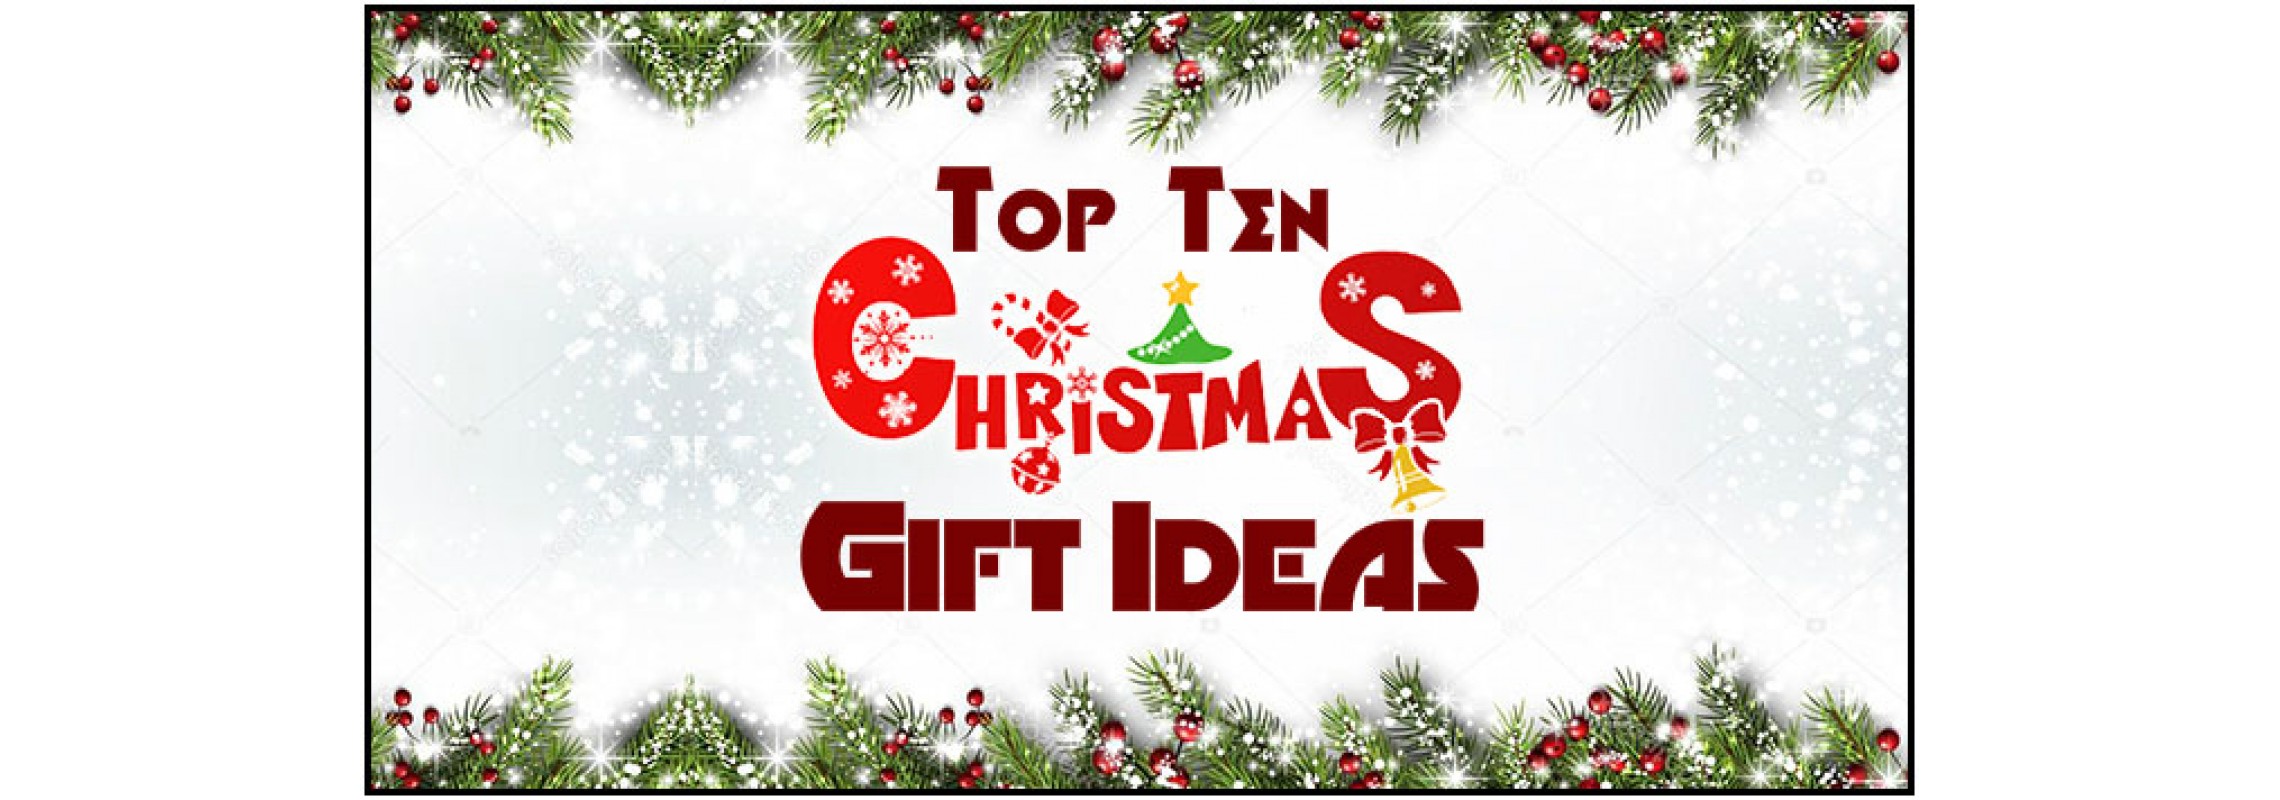 Top Ten Christmas Gift Ideas  Amazing Christmas Gift Ideas